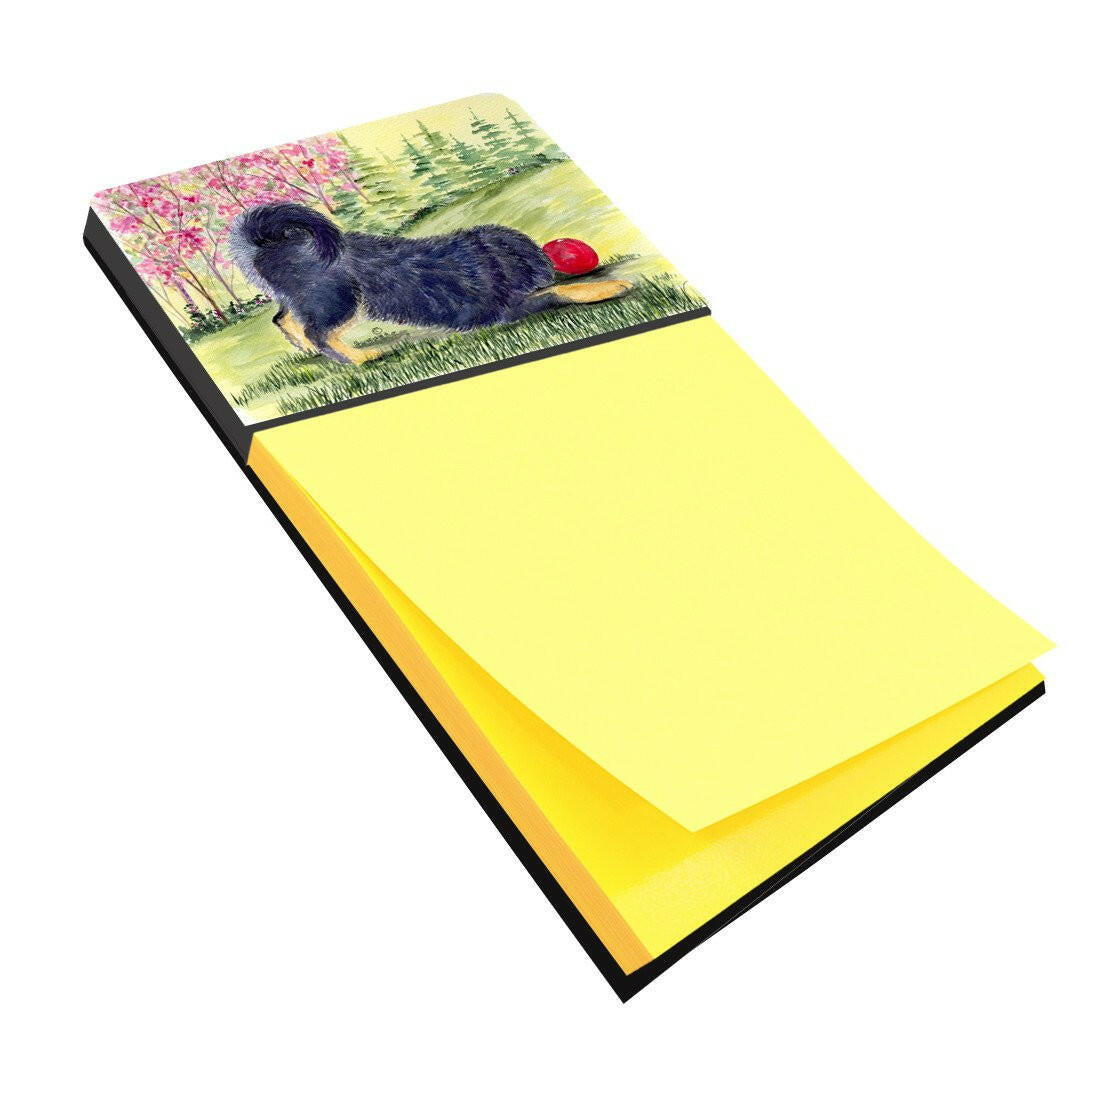 Tibetan Mastiff Refiillable Sticky Note Holder or Postit Note Dispenser SS8612SN by Caroline's Treasures